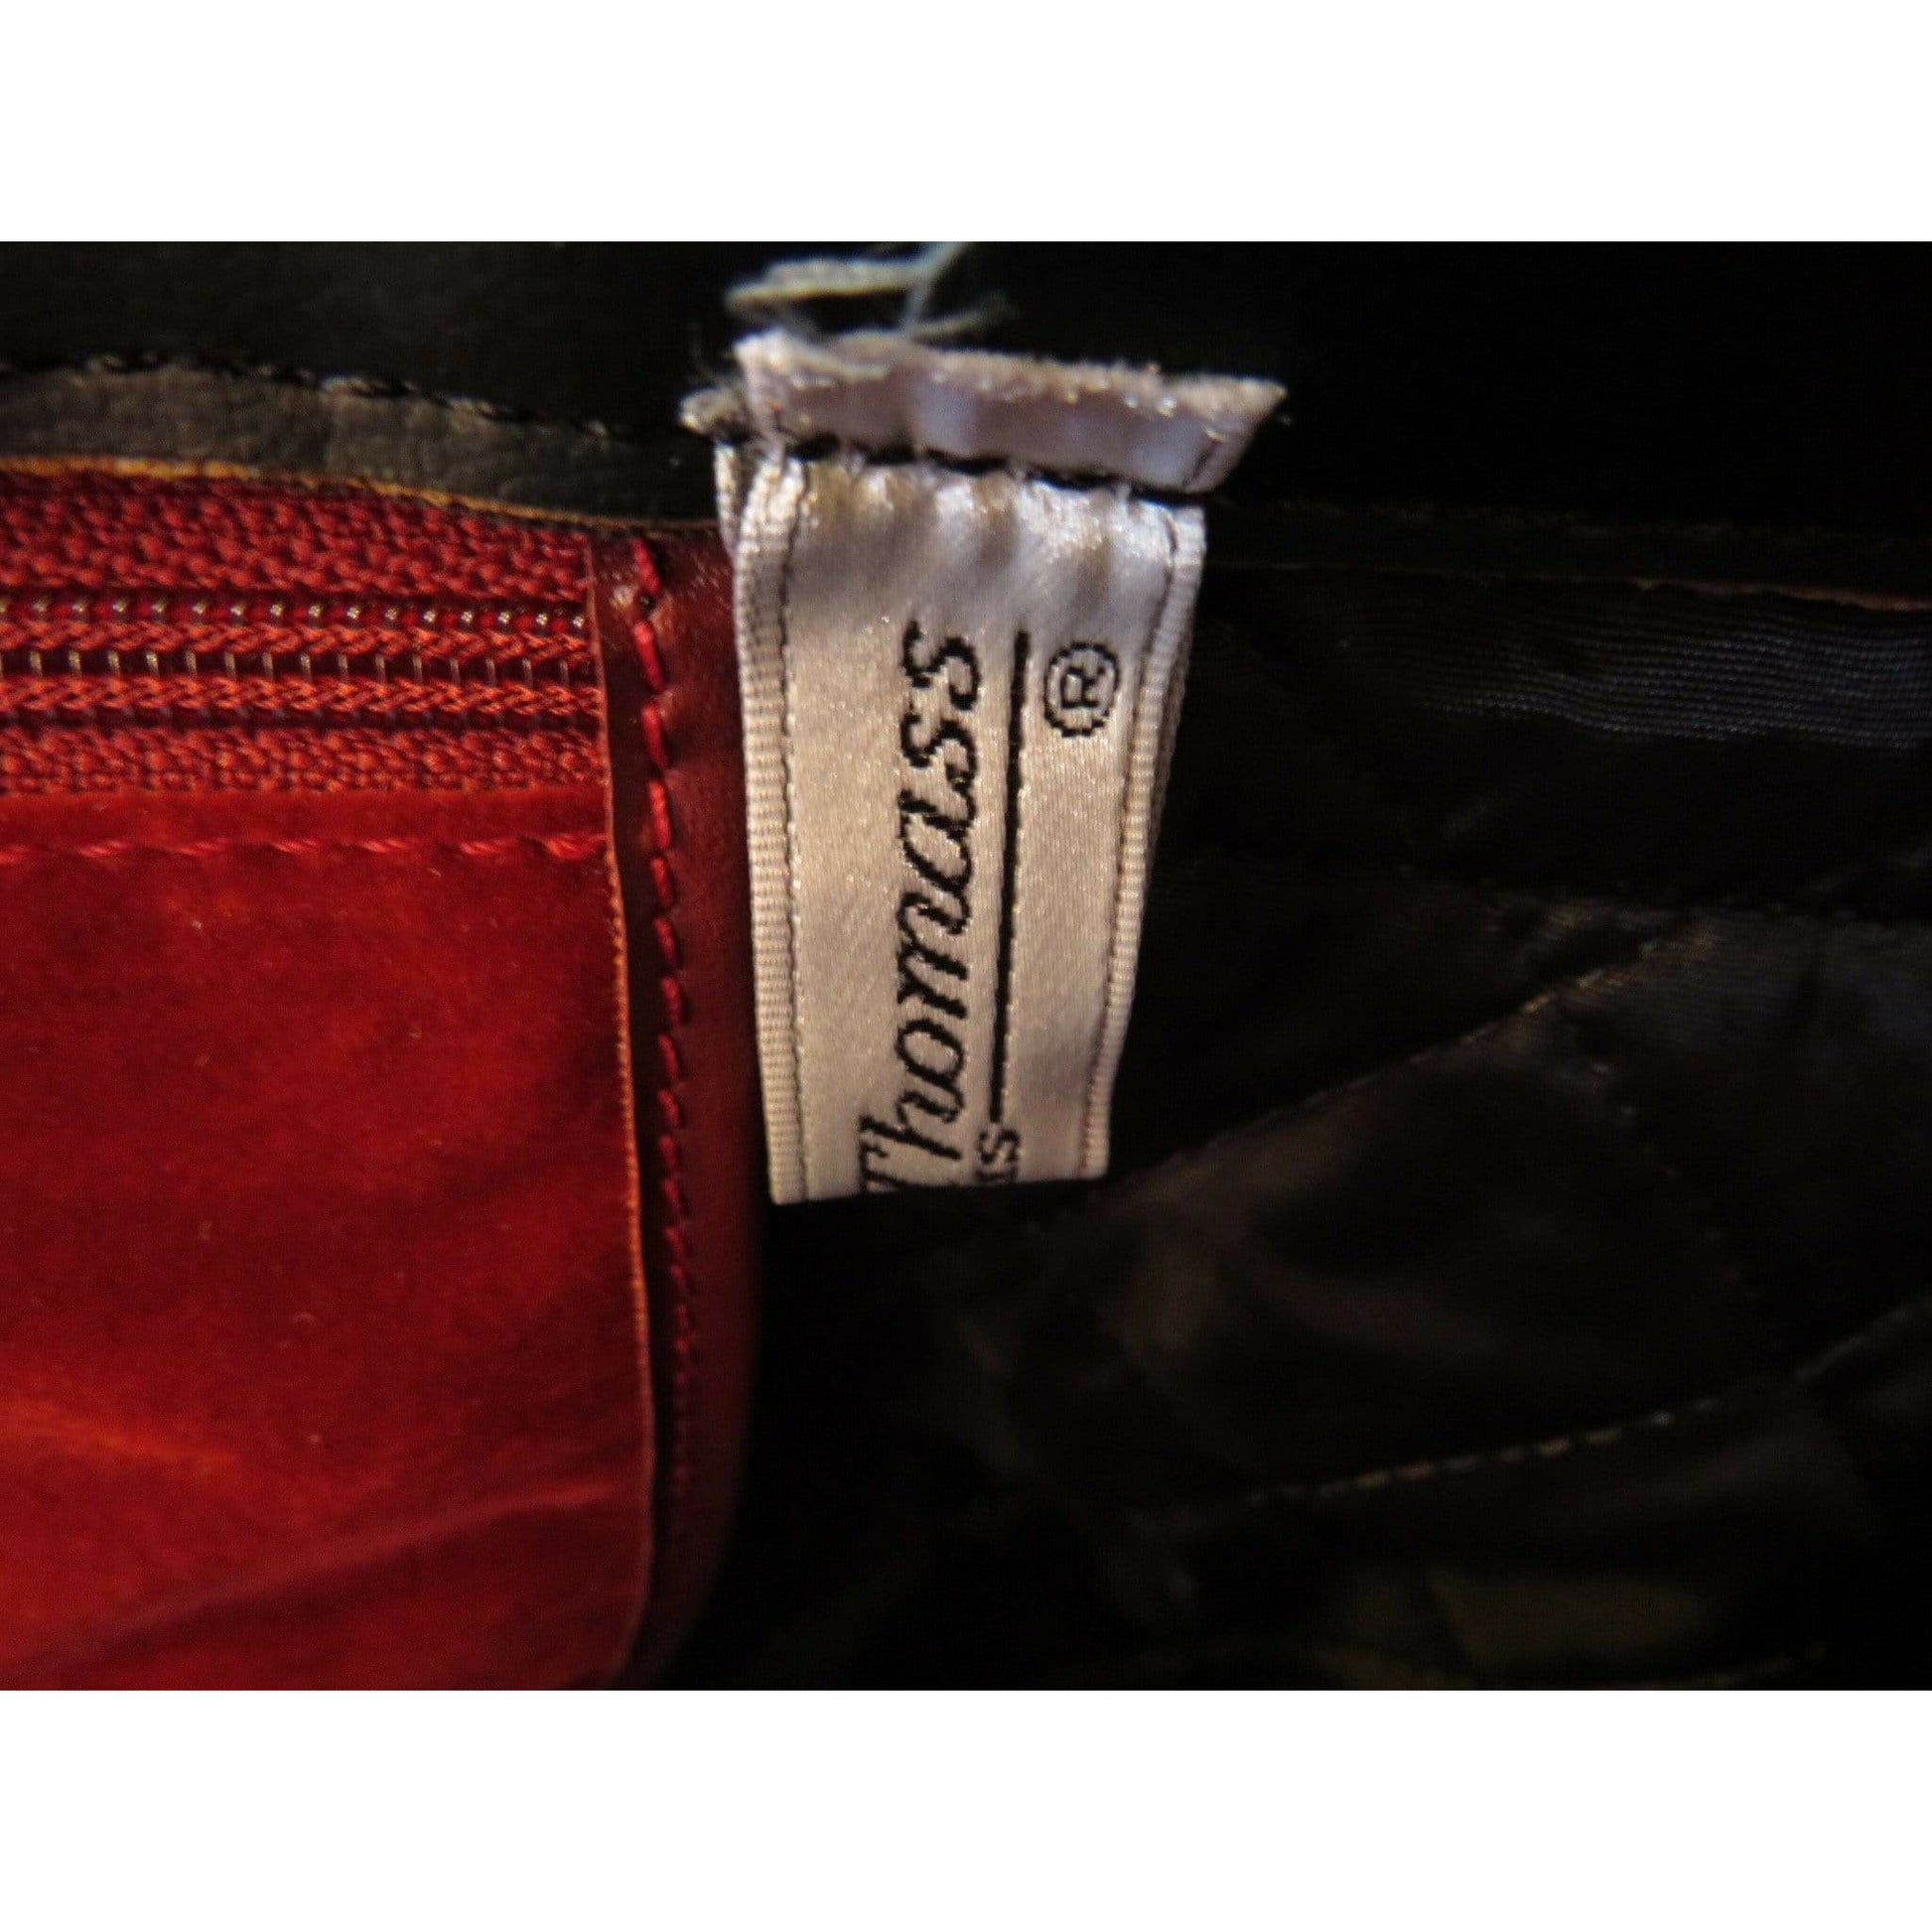 Handbags chantal-thomass-red-velvet-and-lace-shoulder-bag Black